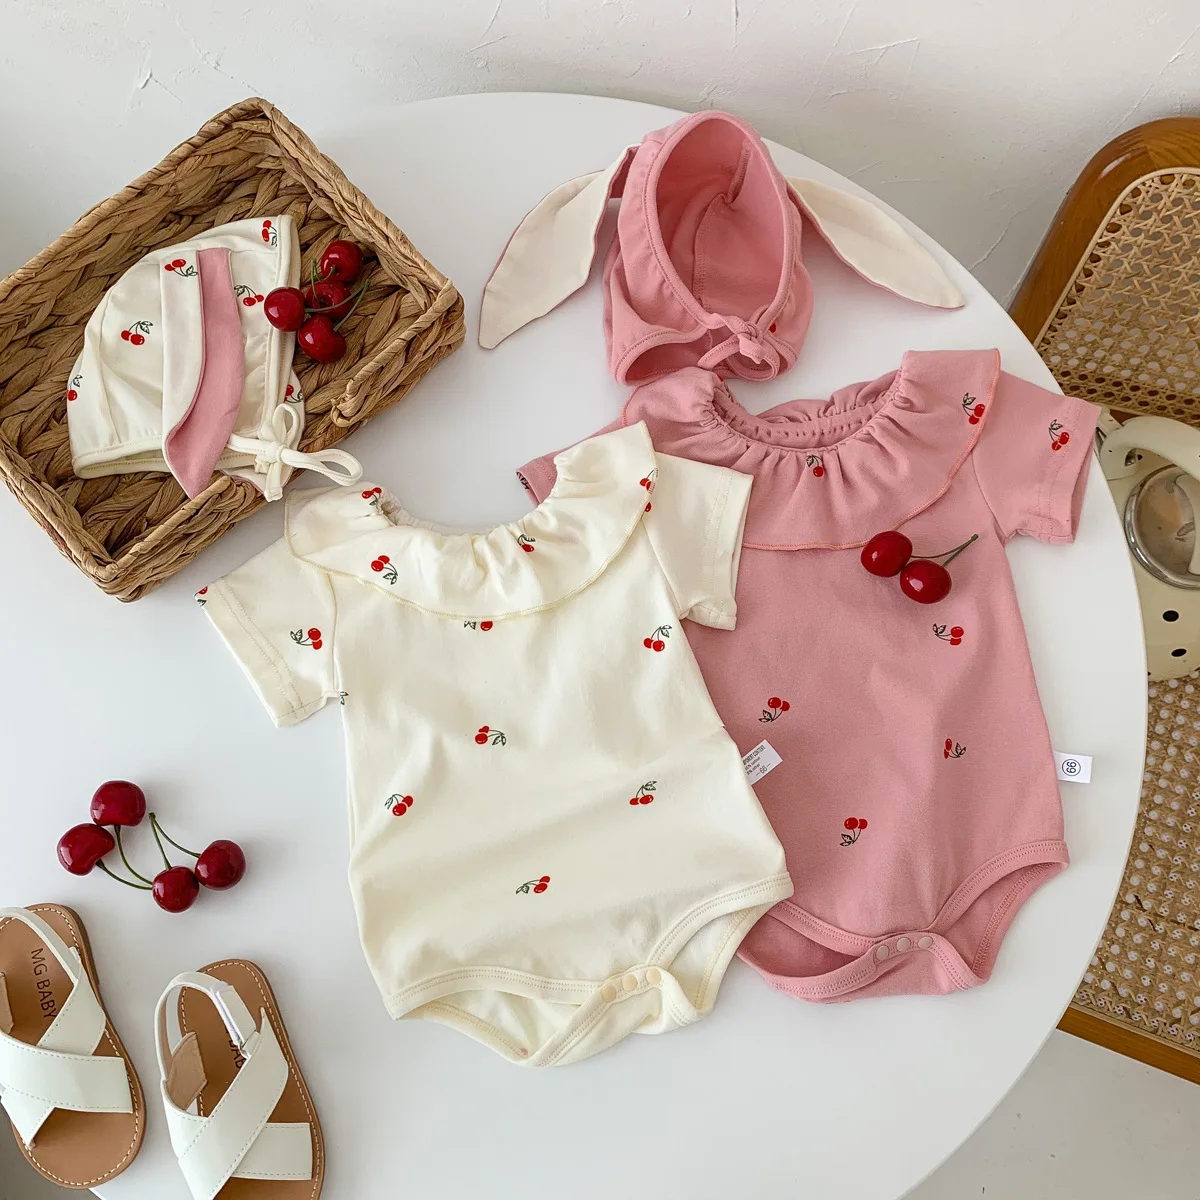 

Summer Baby Clothes Newborn Cherry Romper Boy Girl Cotton Onesie Toddler Cute Clothing With Rabbit Ears Hat Kids Jumpsuit 0-24M